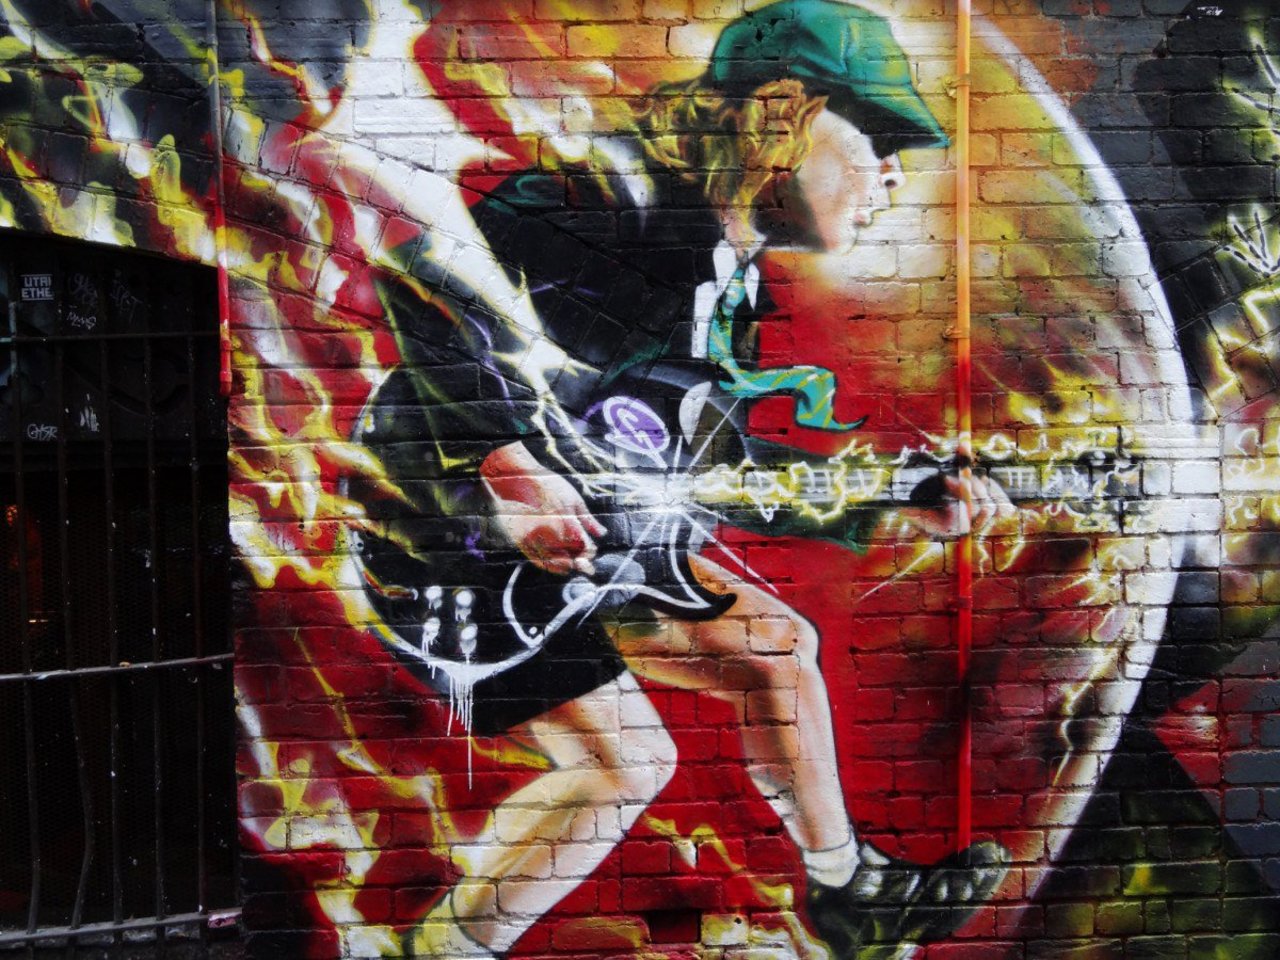 ACDC Lane, Melbourne, Australia #ACDC #Angusyoung #Streetart #urbanart #graffiti #mural #art #Melbourne #Australia https://t.co/WGYnGiwjMA